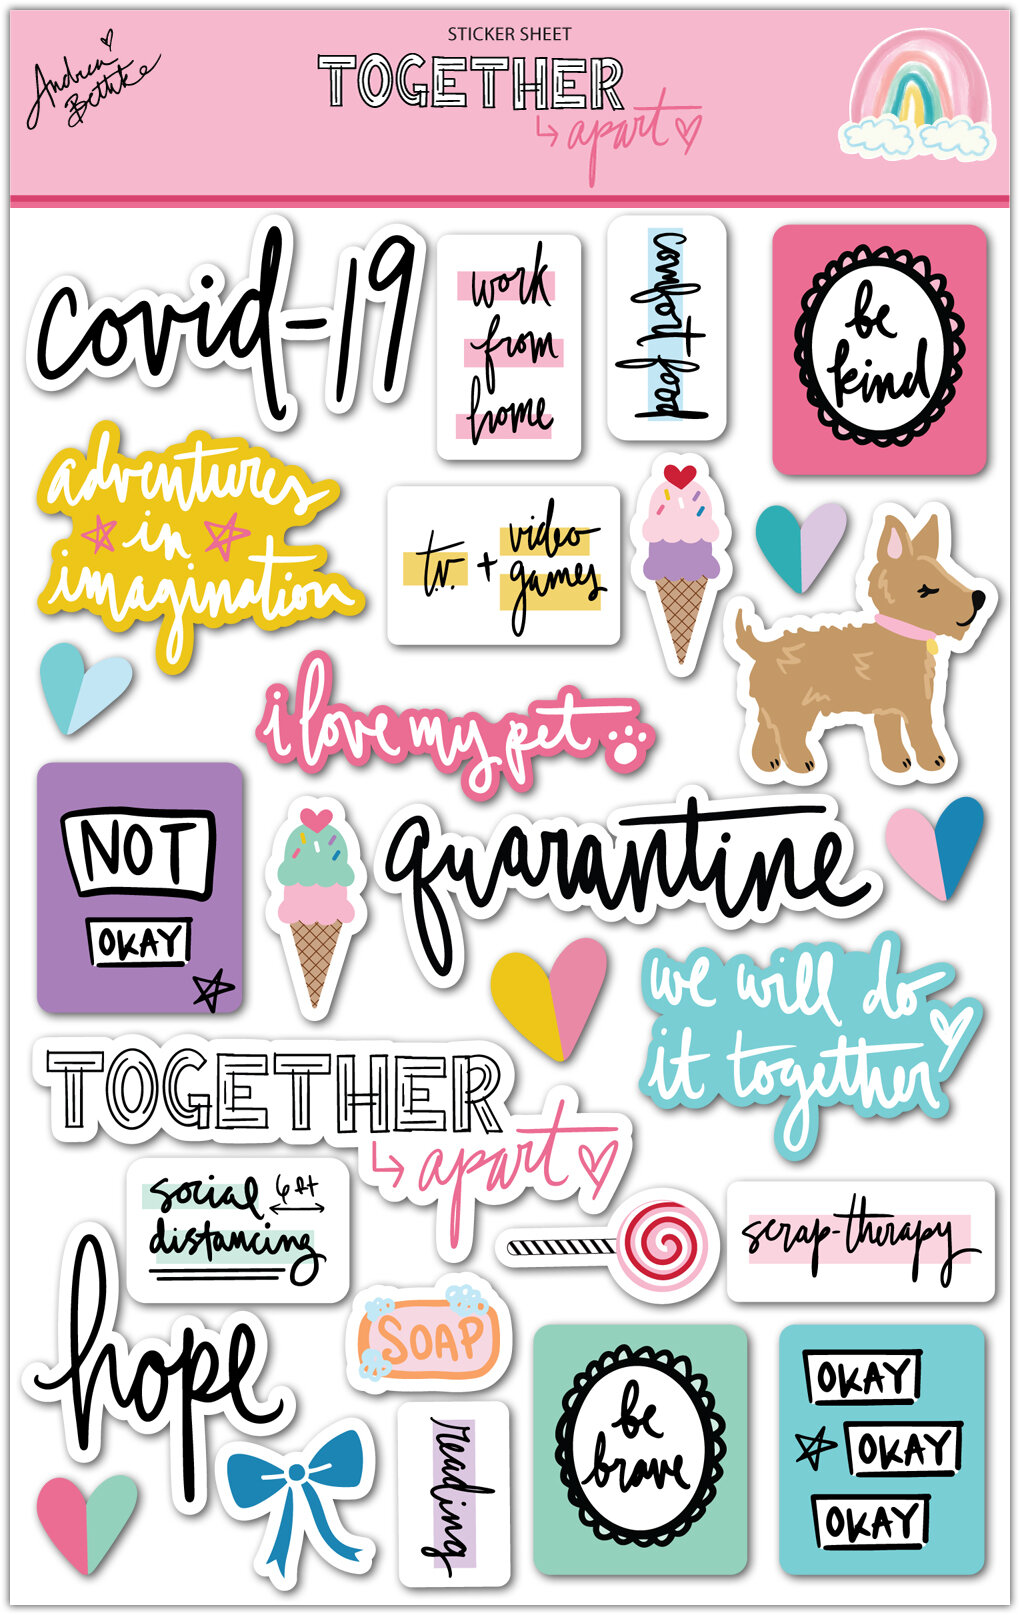 Together-Apart - Sticker Sheet Full.jpg